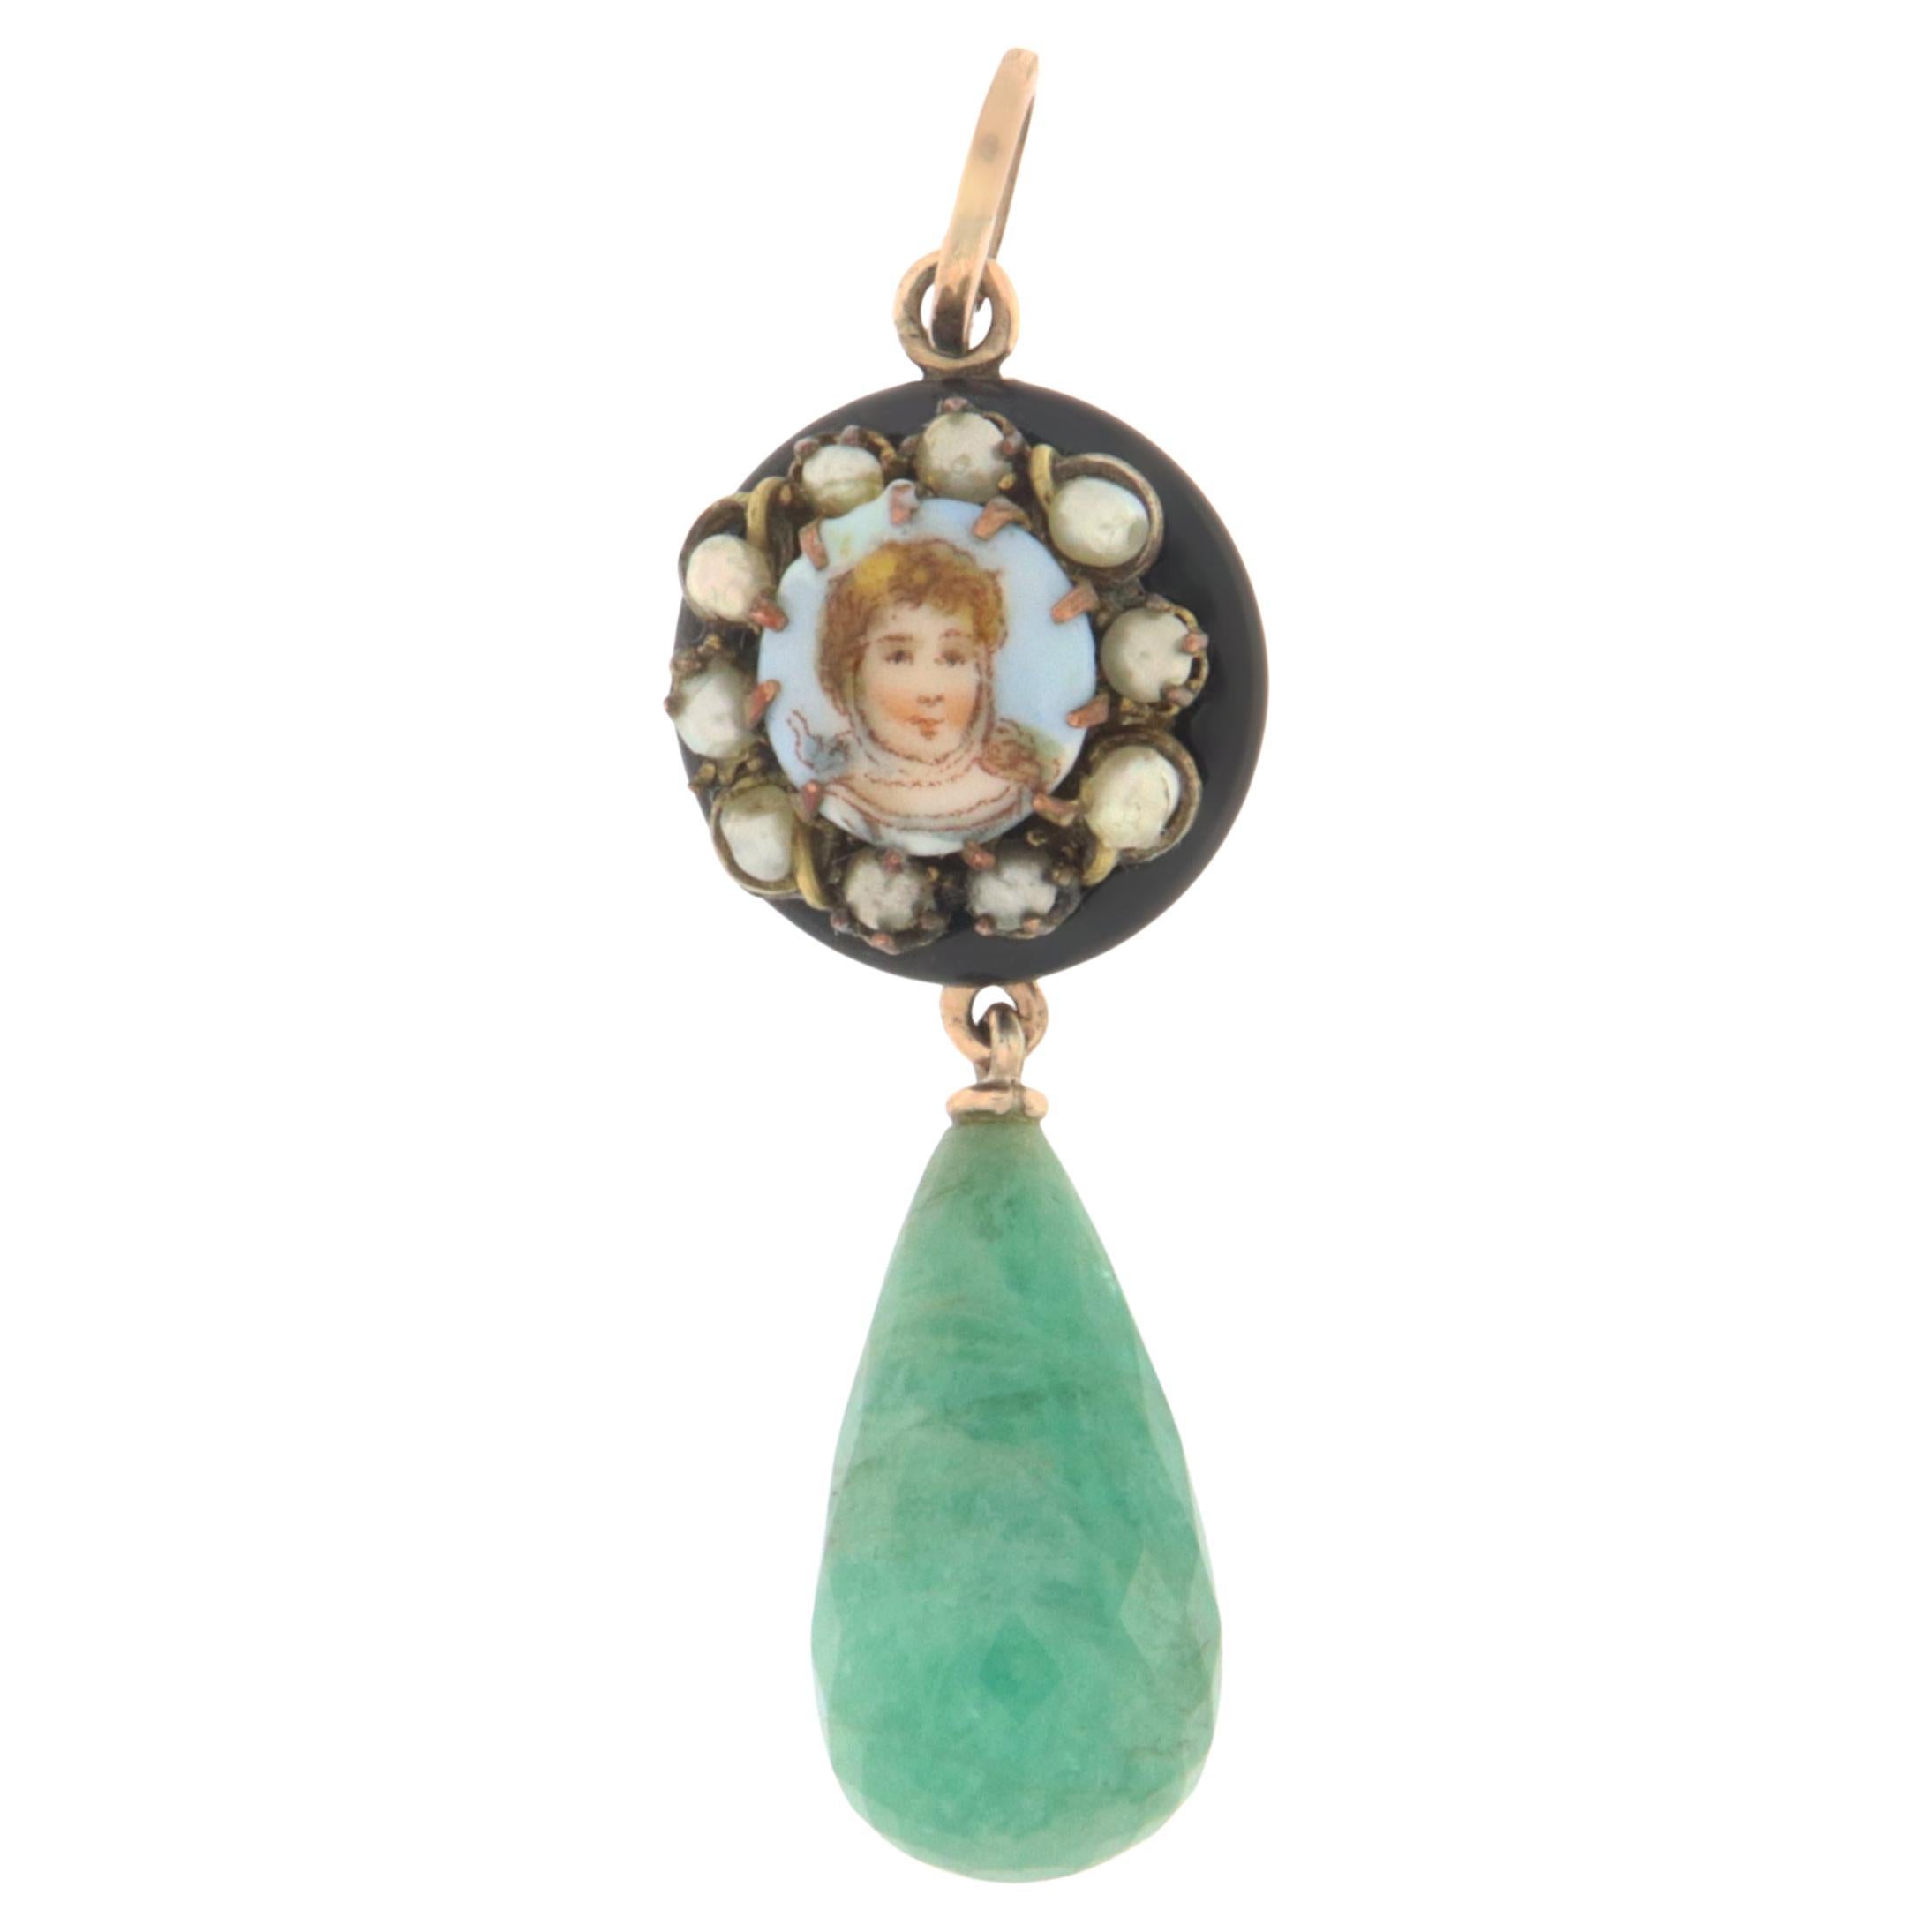 Emerald Pearls Onix Yellow Gold 9 Karat Pendant Necklace